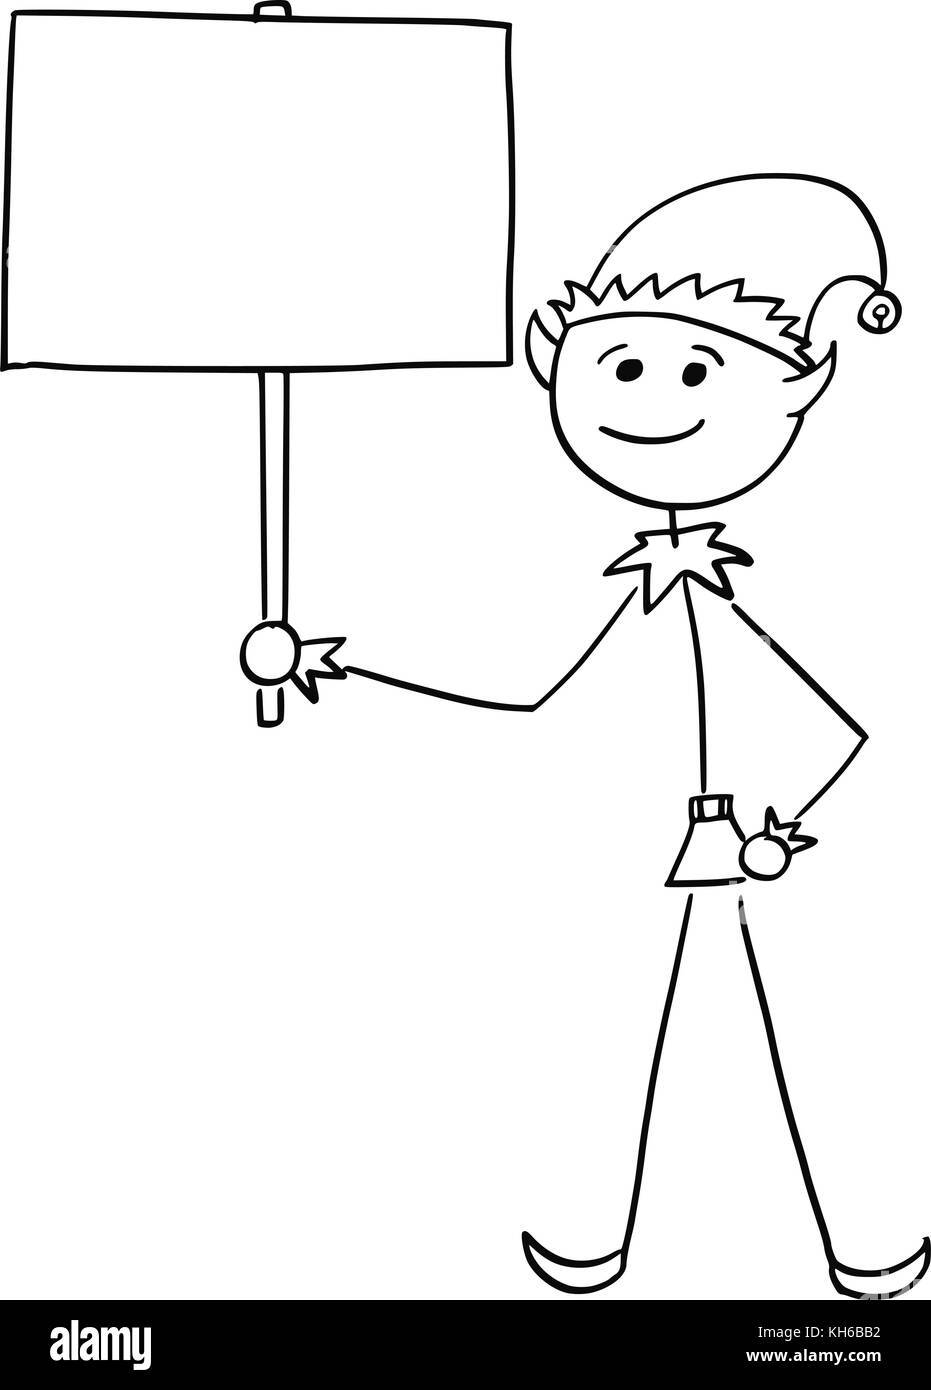 Cartoon drawing illustration of smiling Christmas Santa Claus Elf holding empty blank sign. Stock Vector